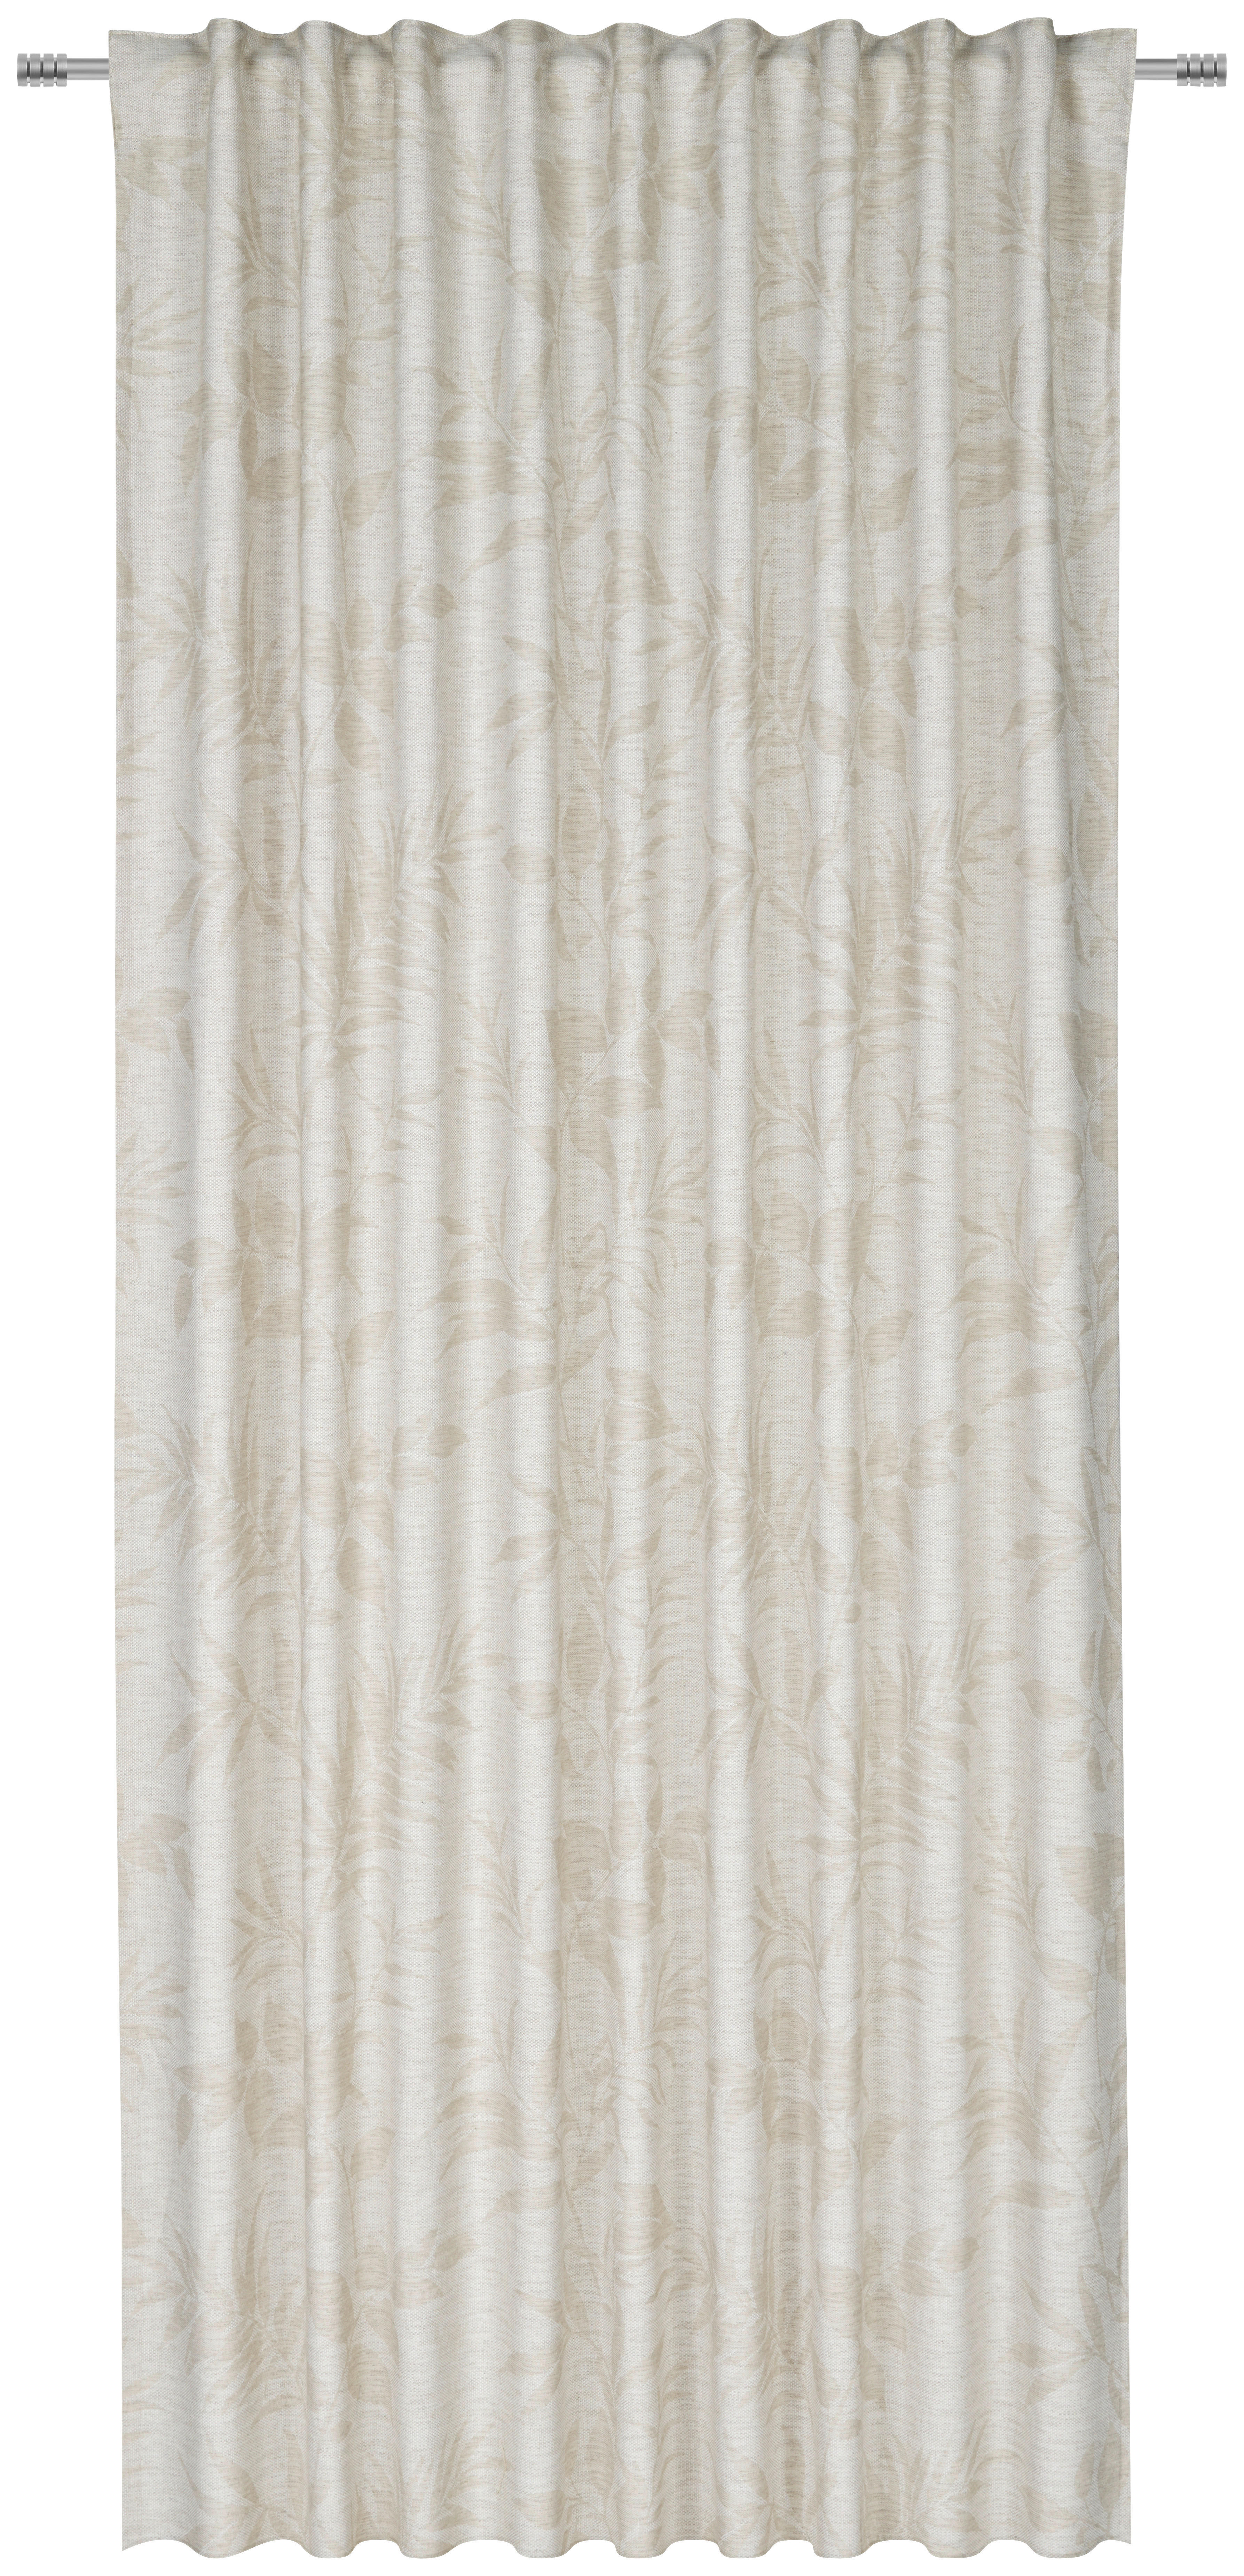 FERTIGVORHANG LA PALMA blickdicht 140/245 cm   - Beige, KONVENTIONELL, Textil (140/245cm) - Esposa